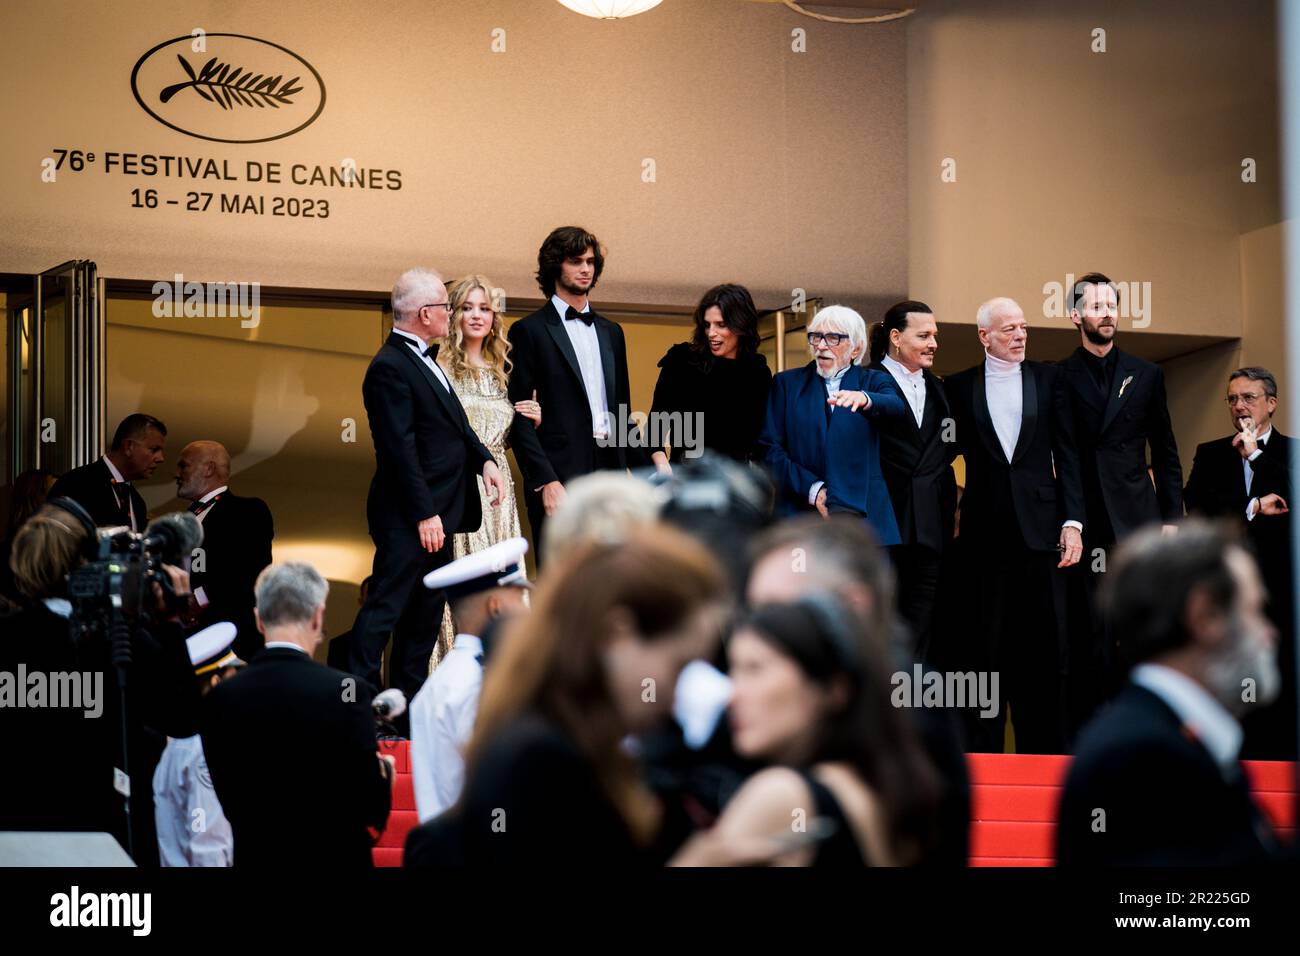 Cannes, Frankreich, 16. Mai 2023, Melvil Poupaud, Pascal Greggory, Benjamin Lavernhe, Pierre Richard, Johnny Depp, Director Maiwenn, Diego Le fur und Pau Stockfoto